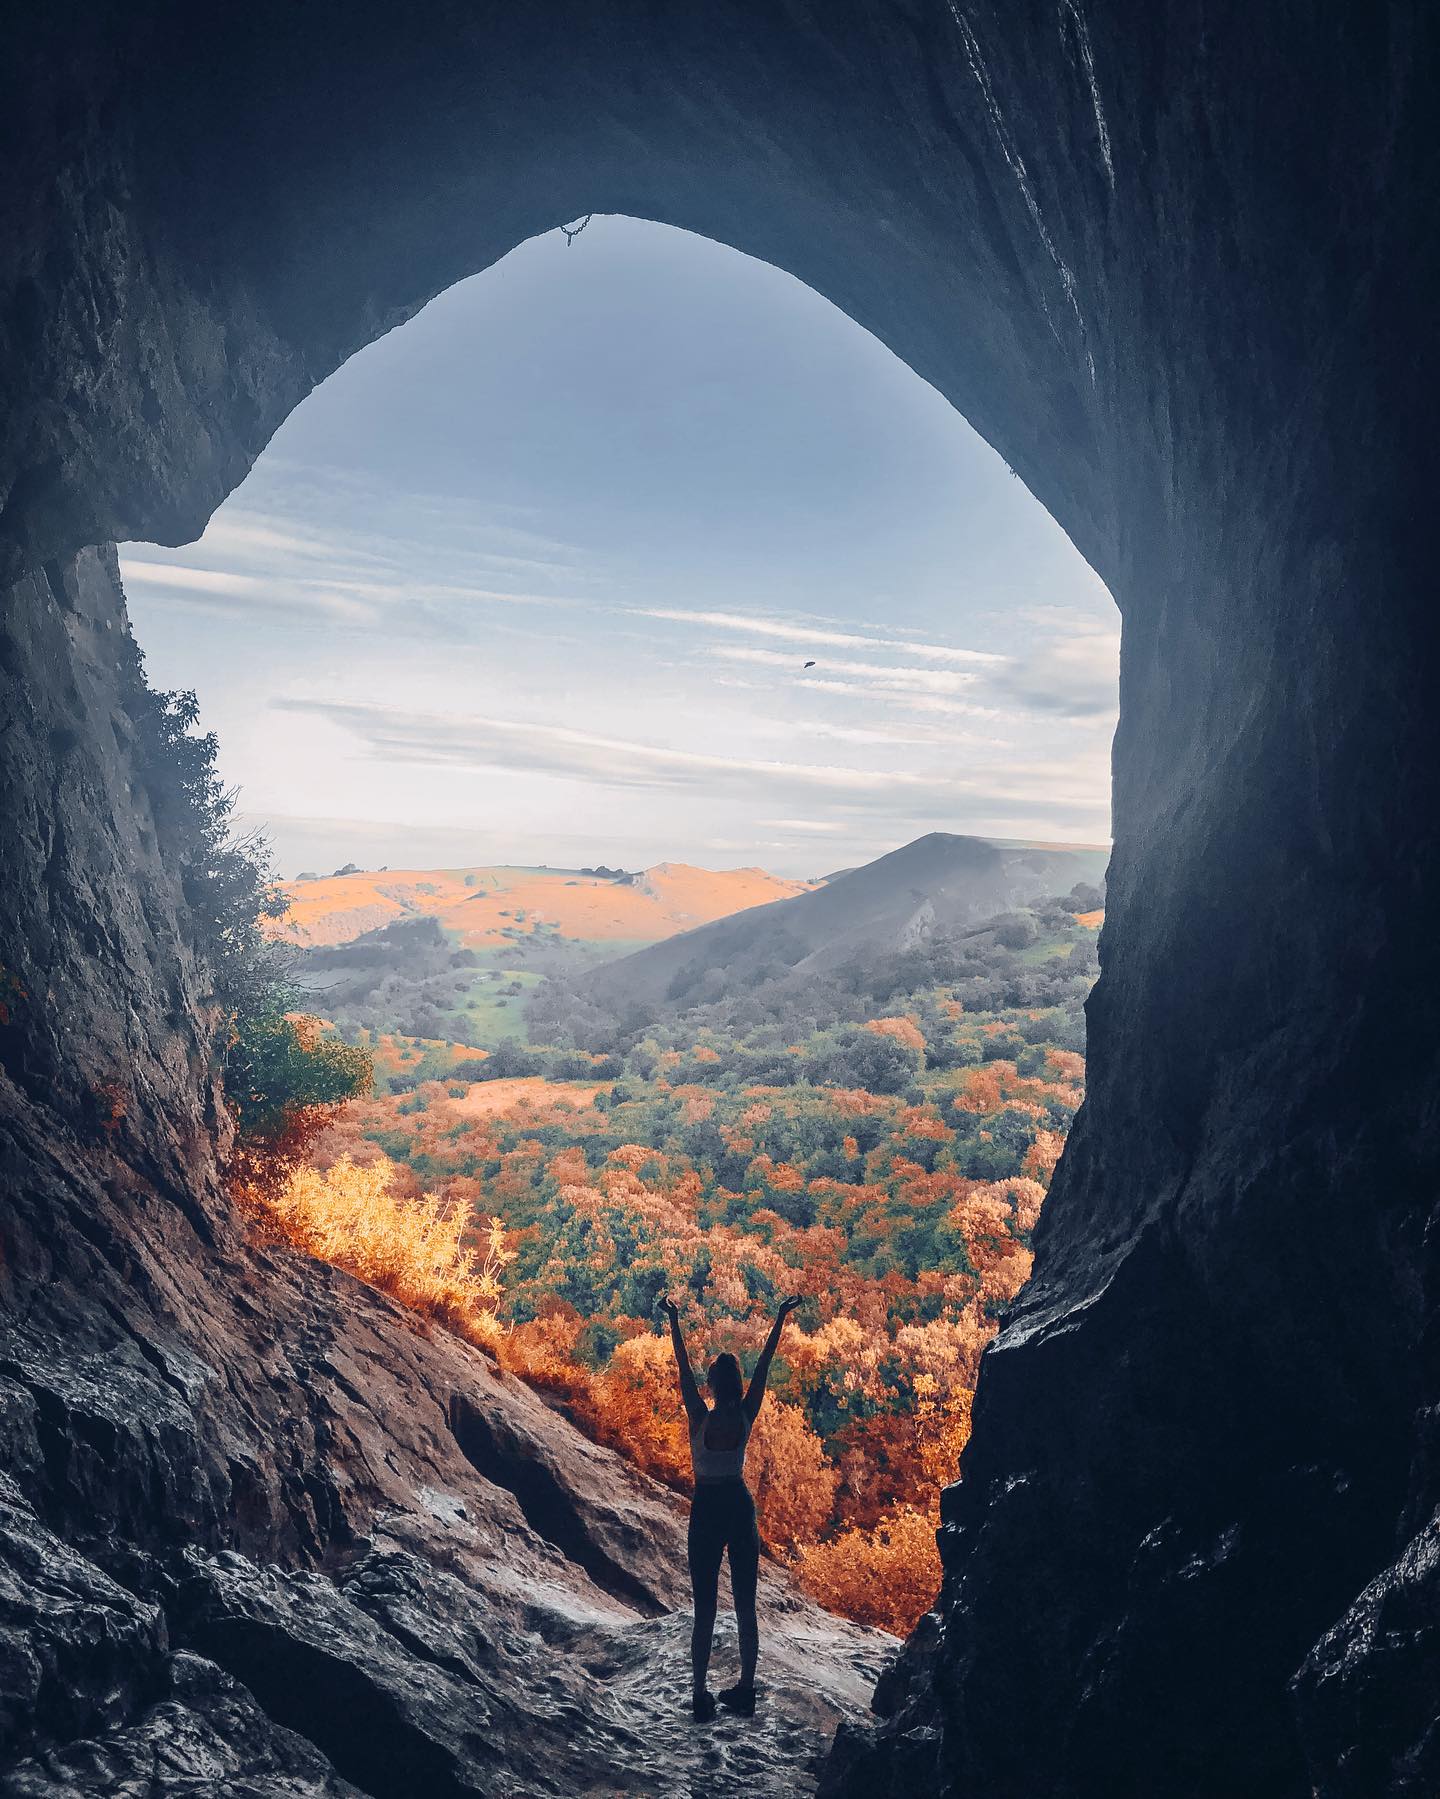 The cave in autumn. Credit: Instagram @jennieclaydon